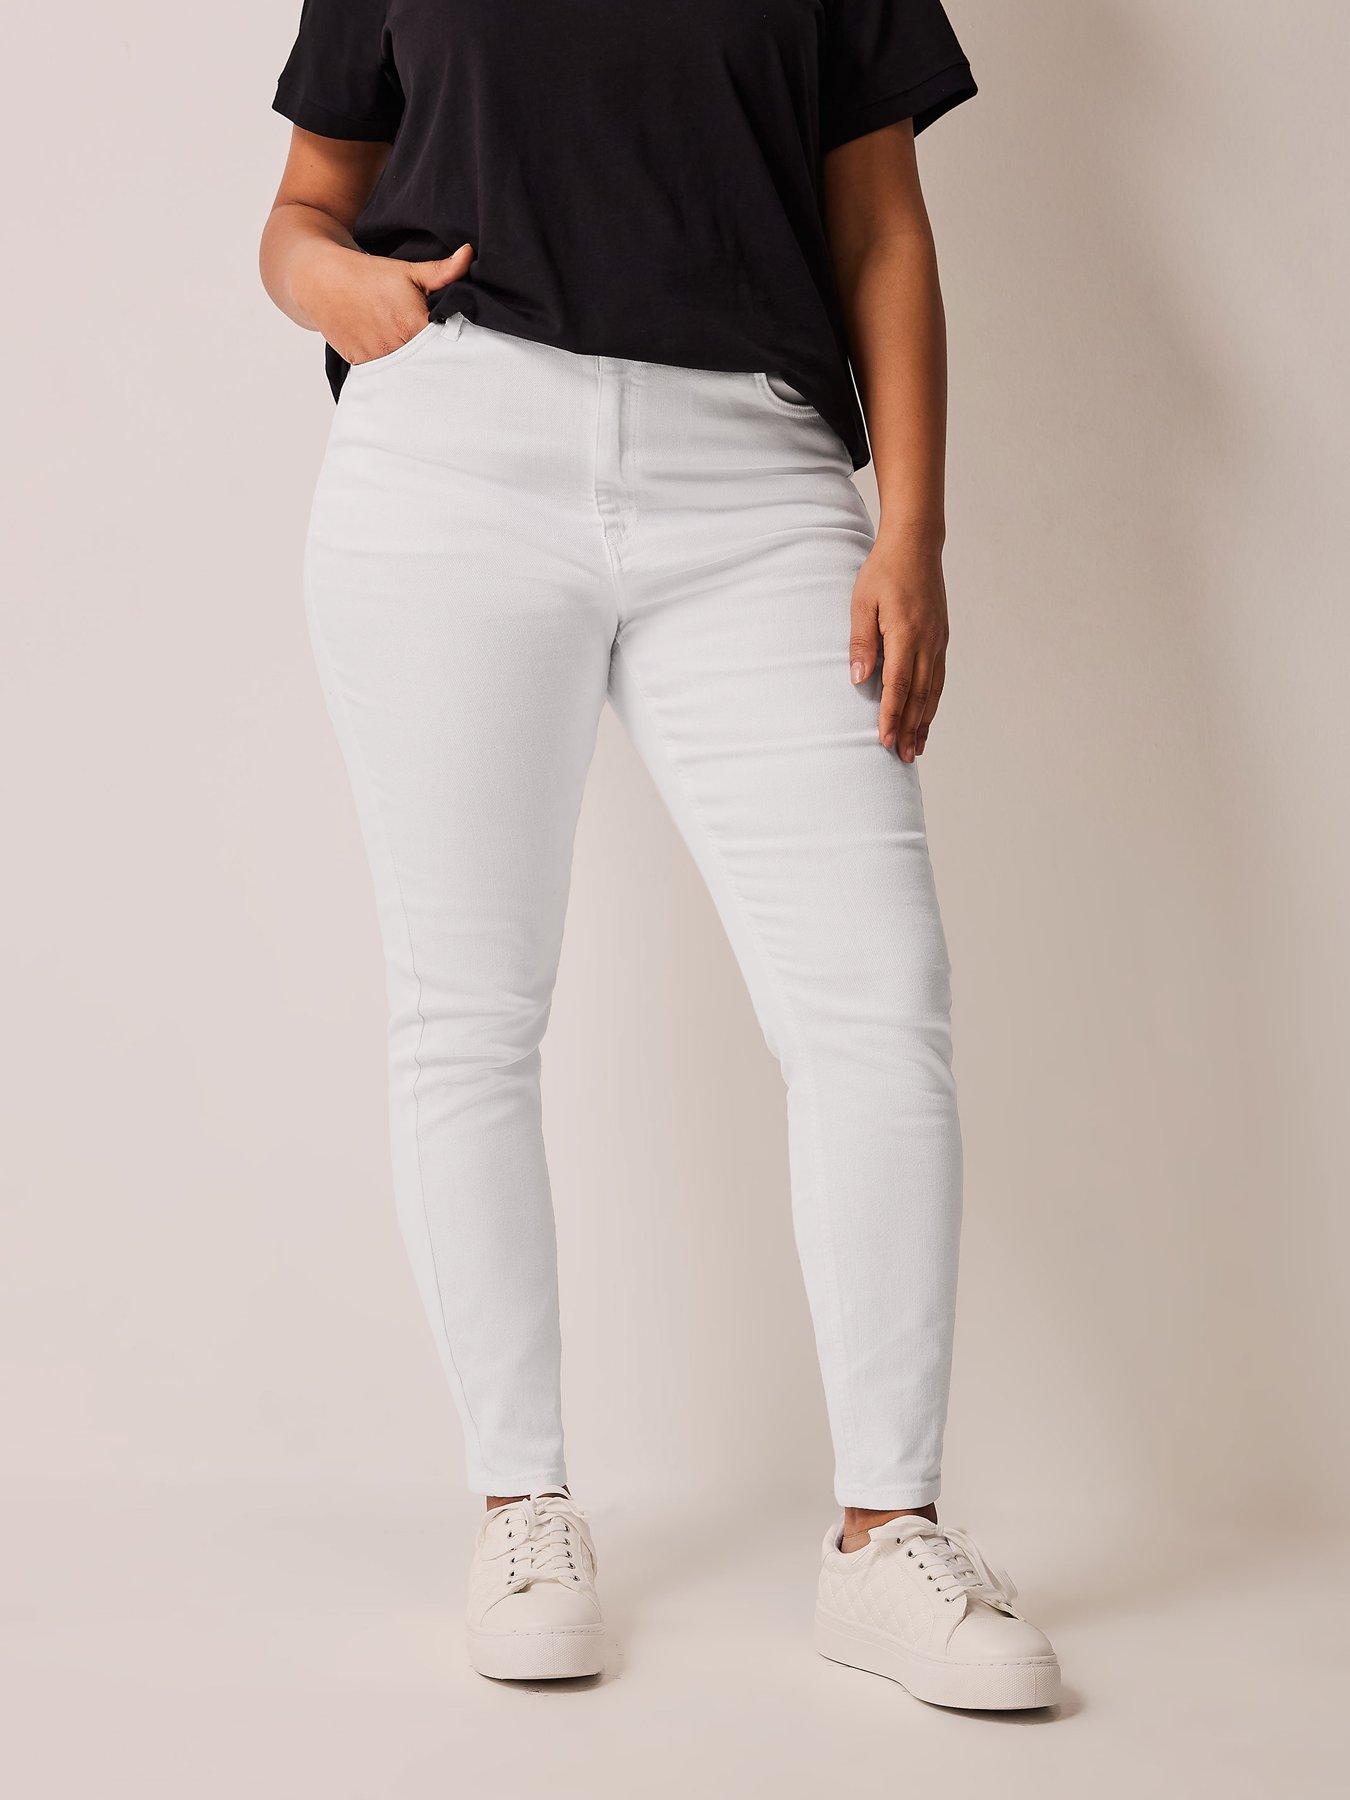 White, Jeans, Women